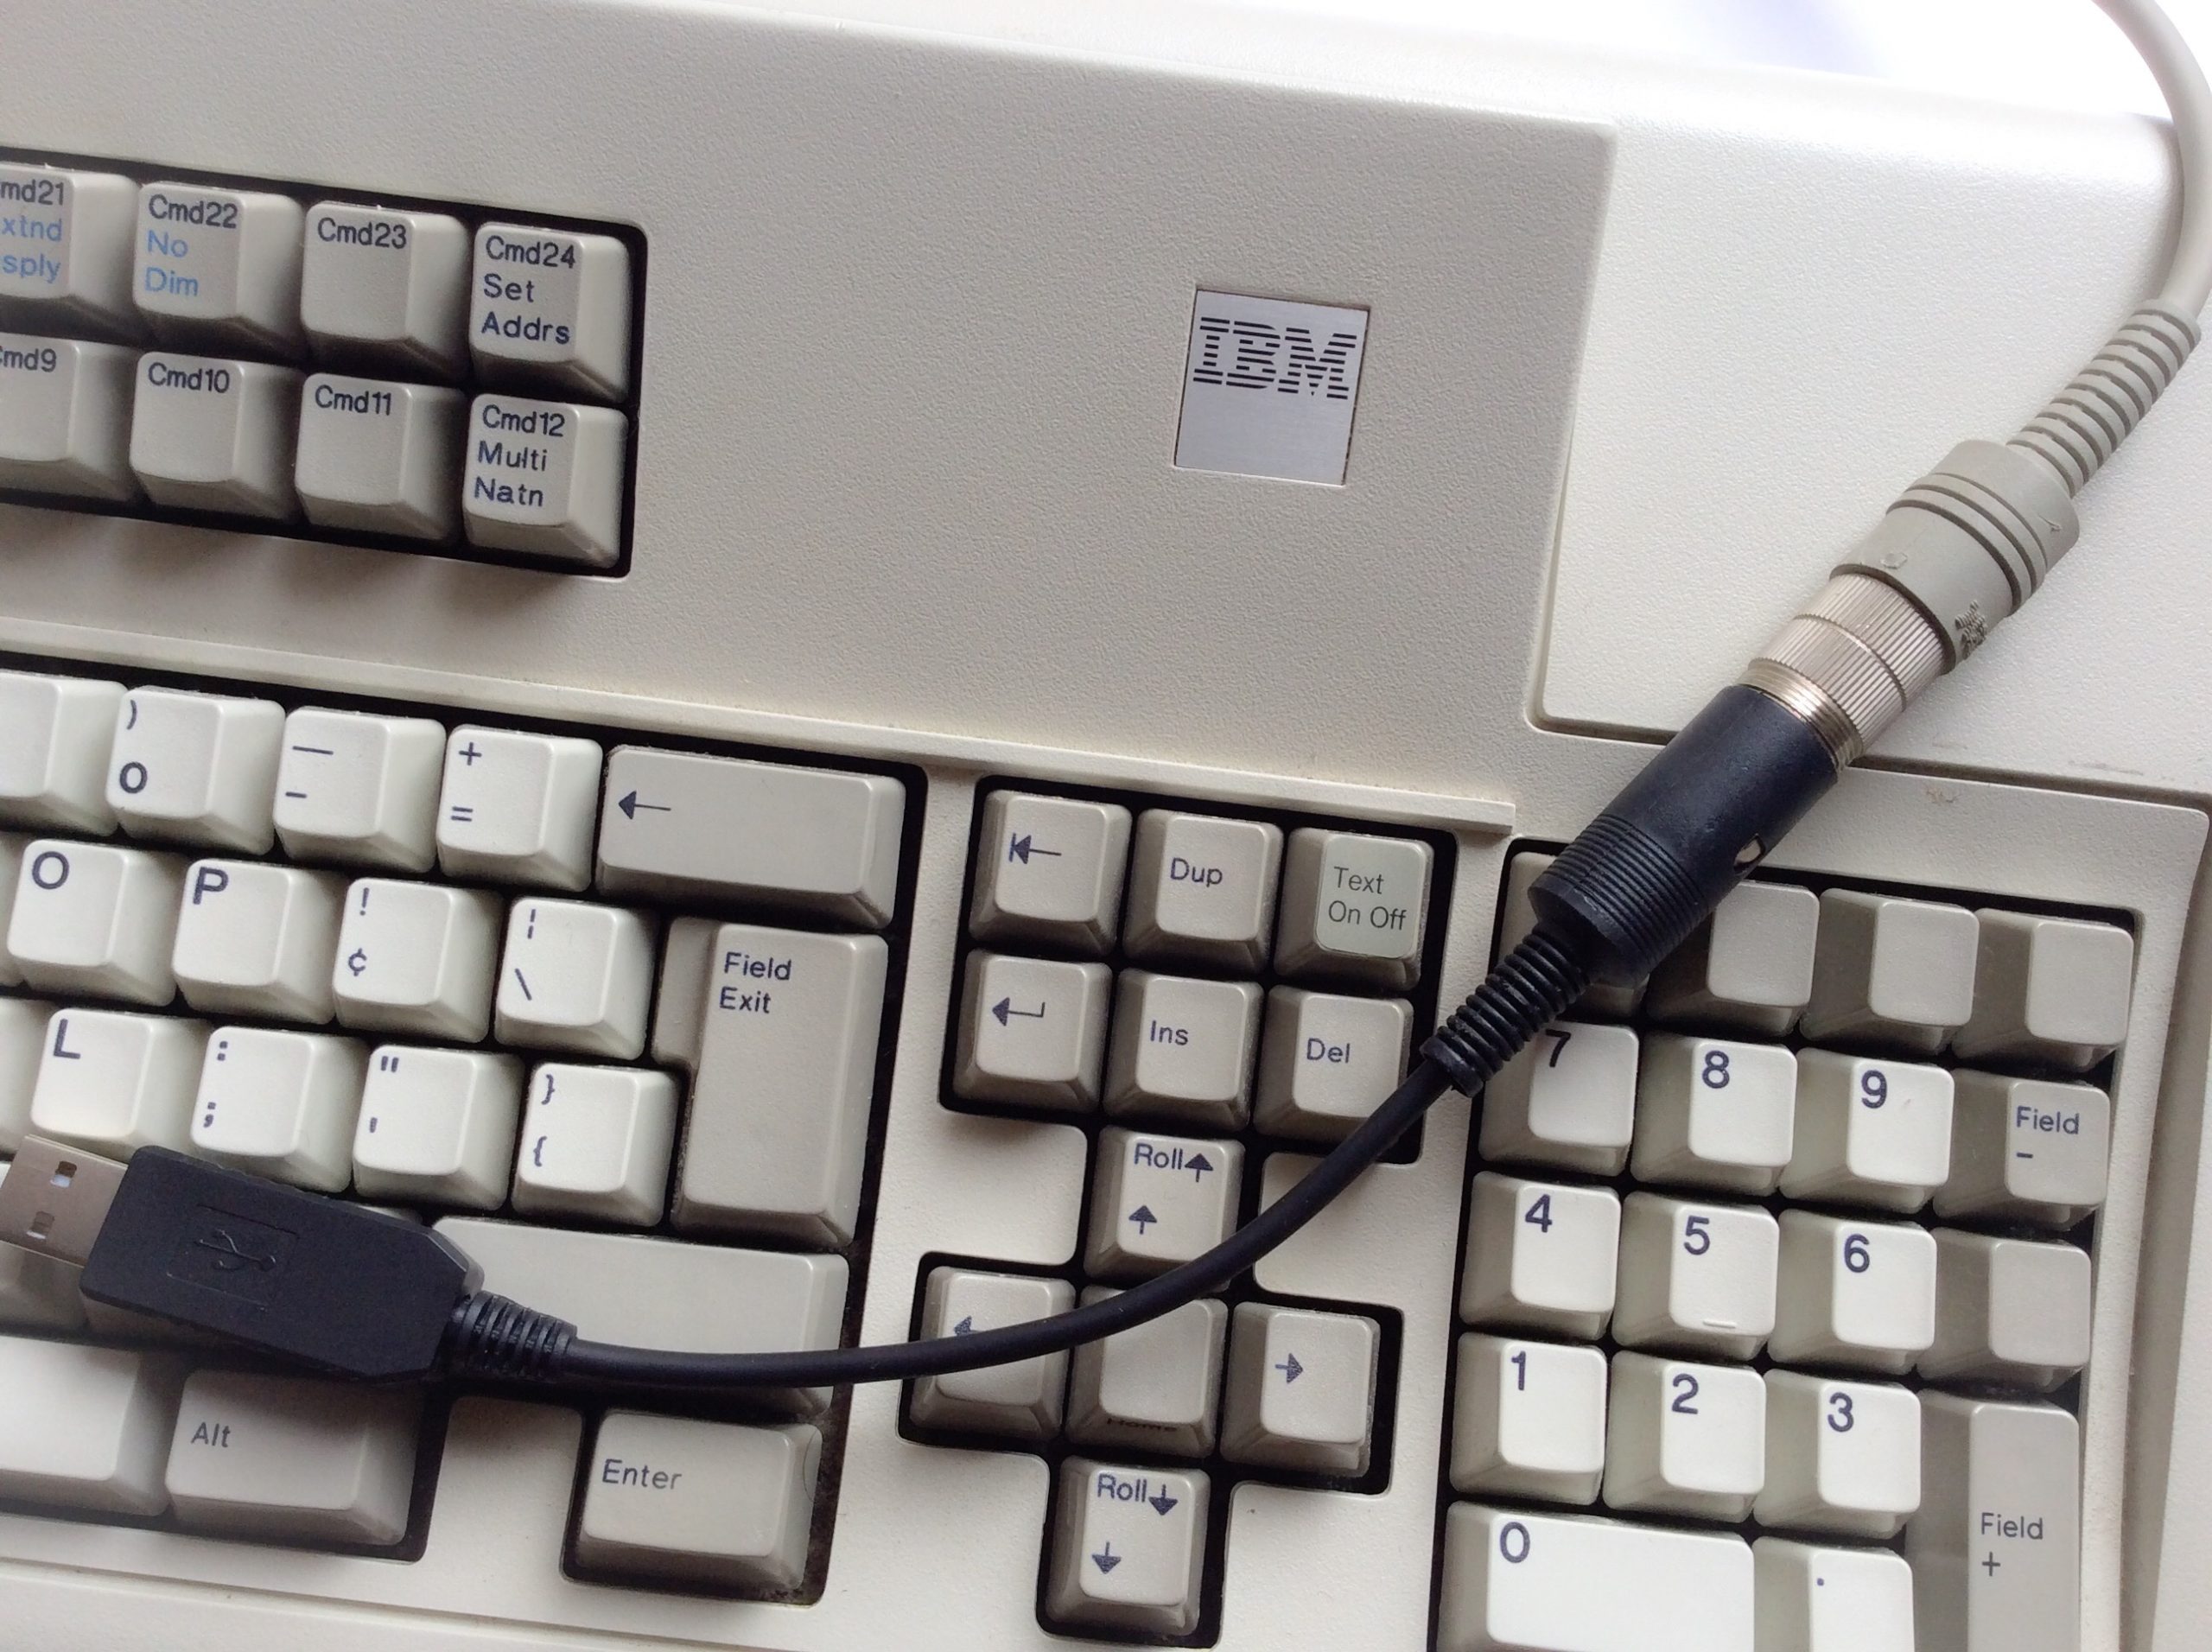 tinkerBOY IBM Terminal Keyboard (240 Degree, 5-pin DIN) to USB Converter  with Vial QMK Firmware